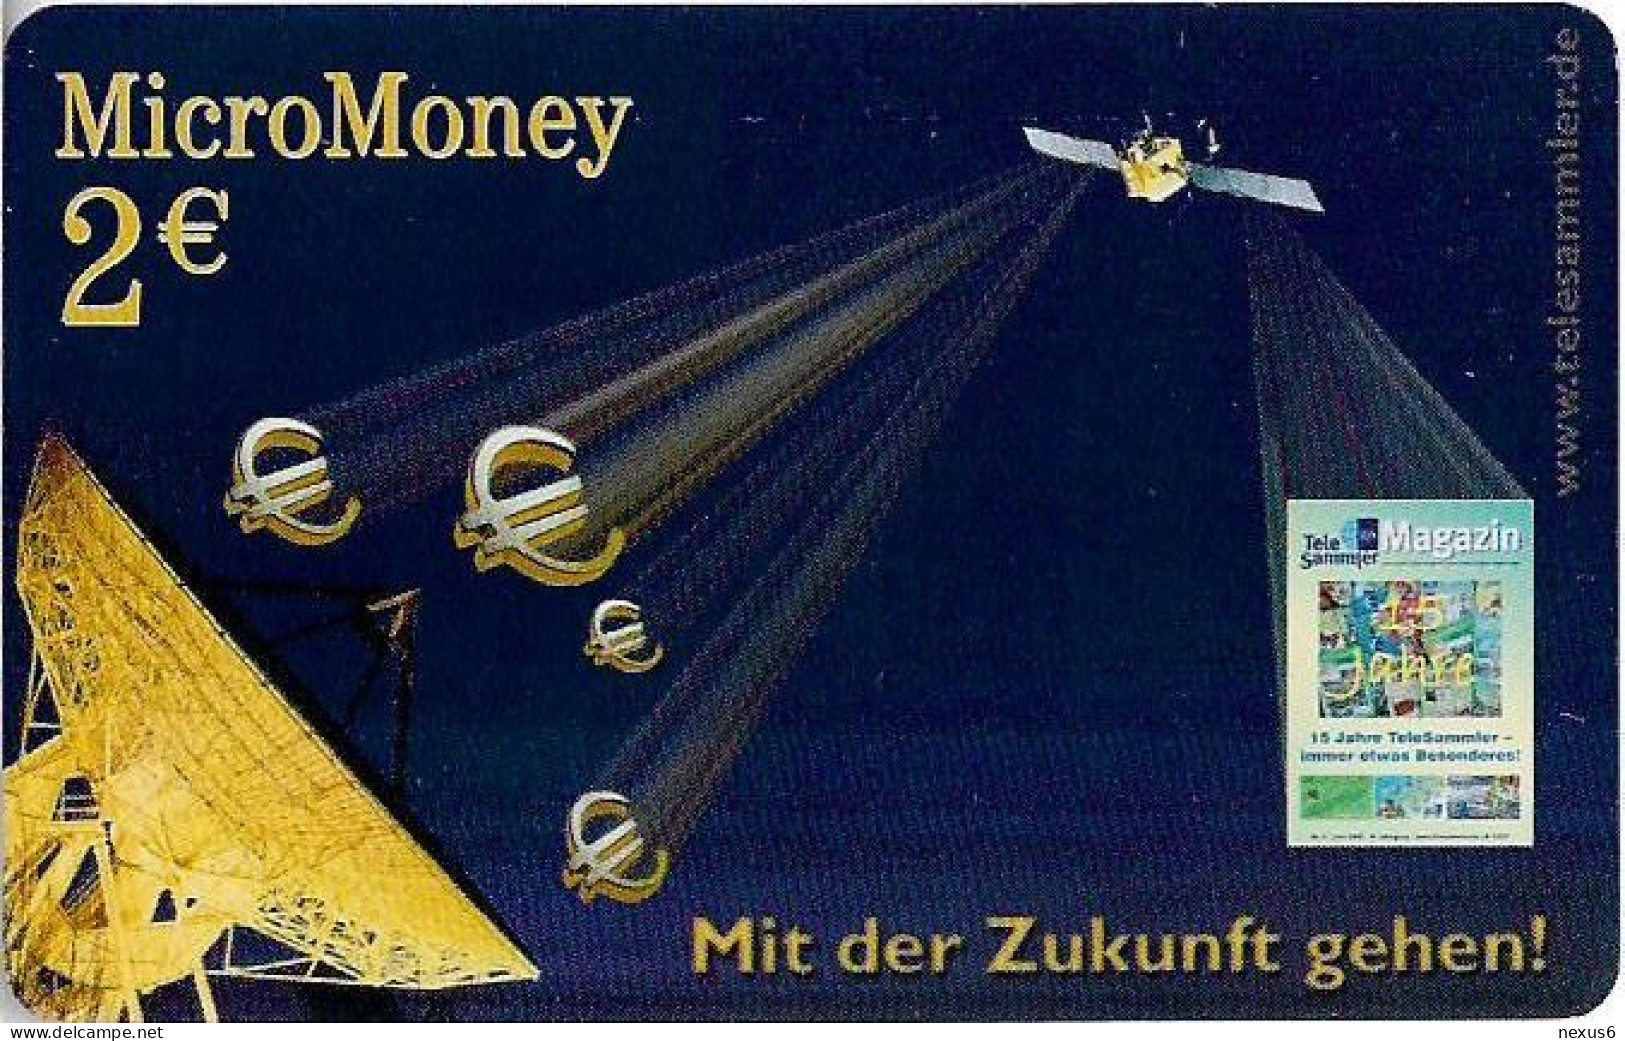 Germany - Micromoney - GHP MM O 006-07.04 - TeleSammler E.V Magazine (Satellite), Exp.02.2006, Rem. Mem. 2€, 500ex, Mint - T-Pay Micro-Money